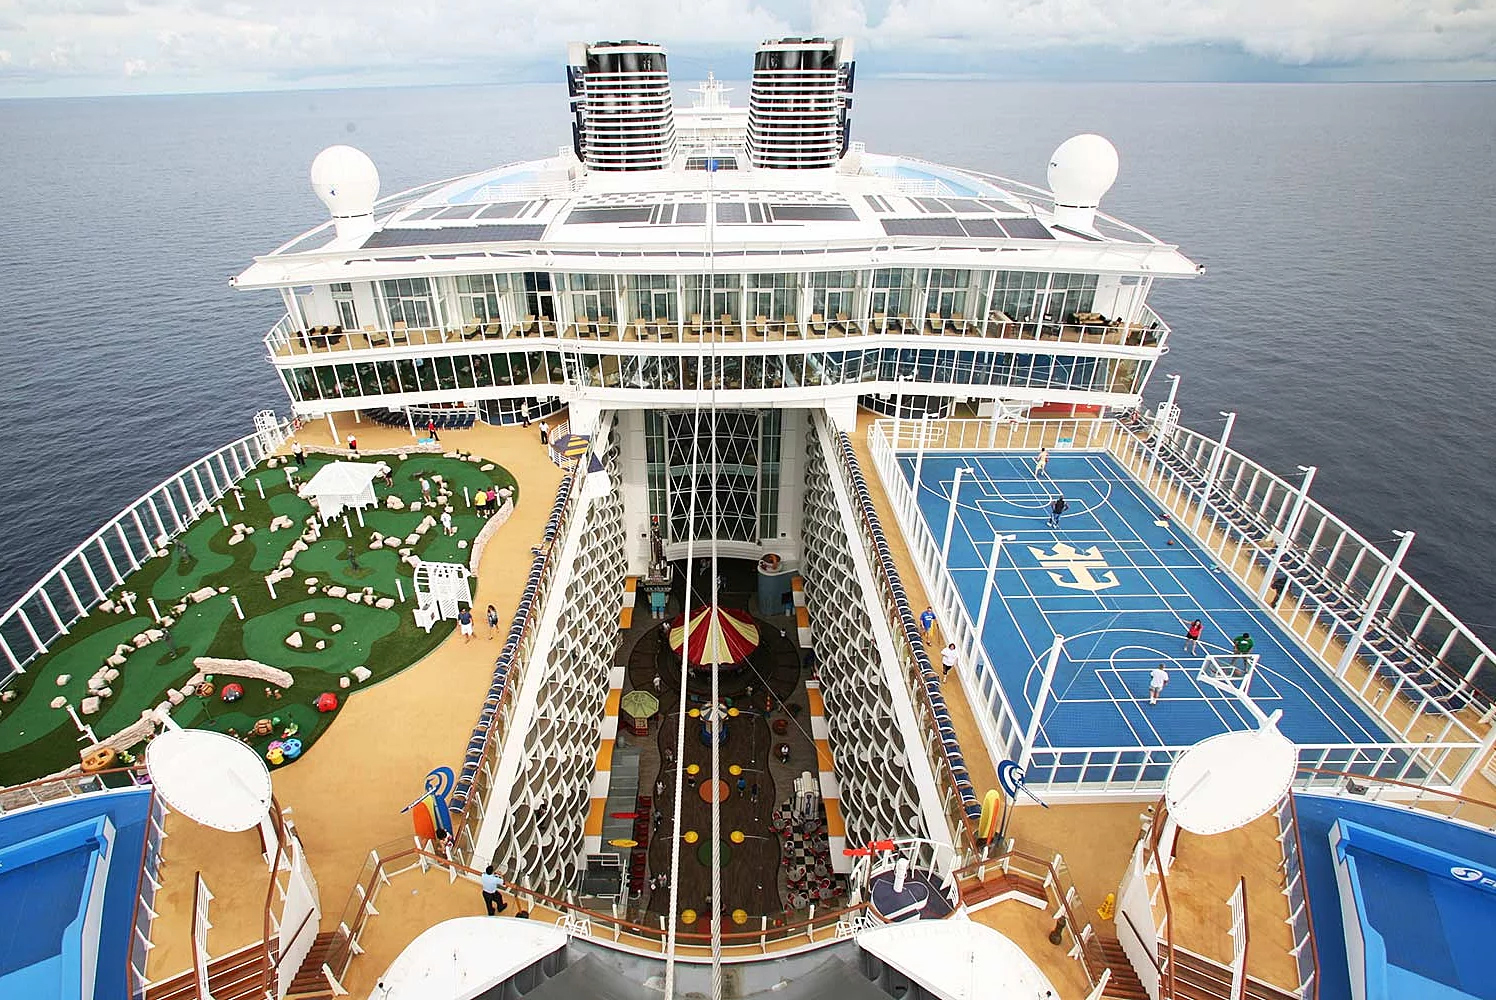 Cruise Ship 'Oasis of the Seas'